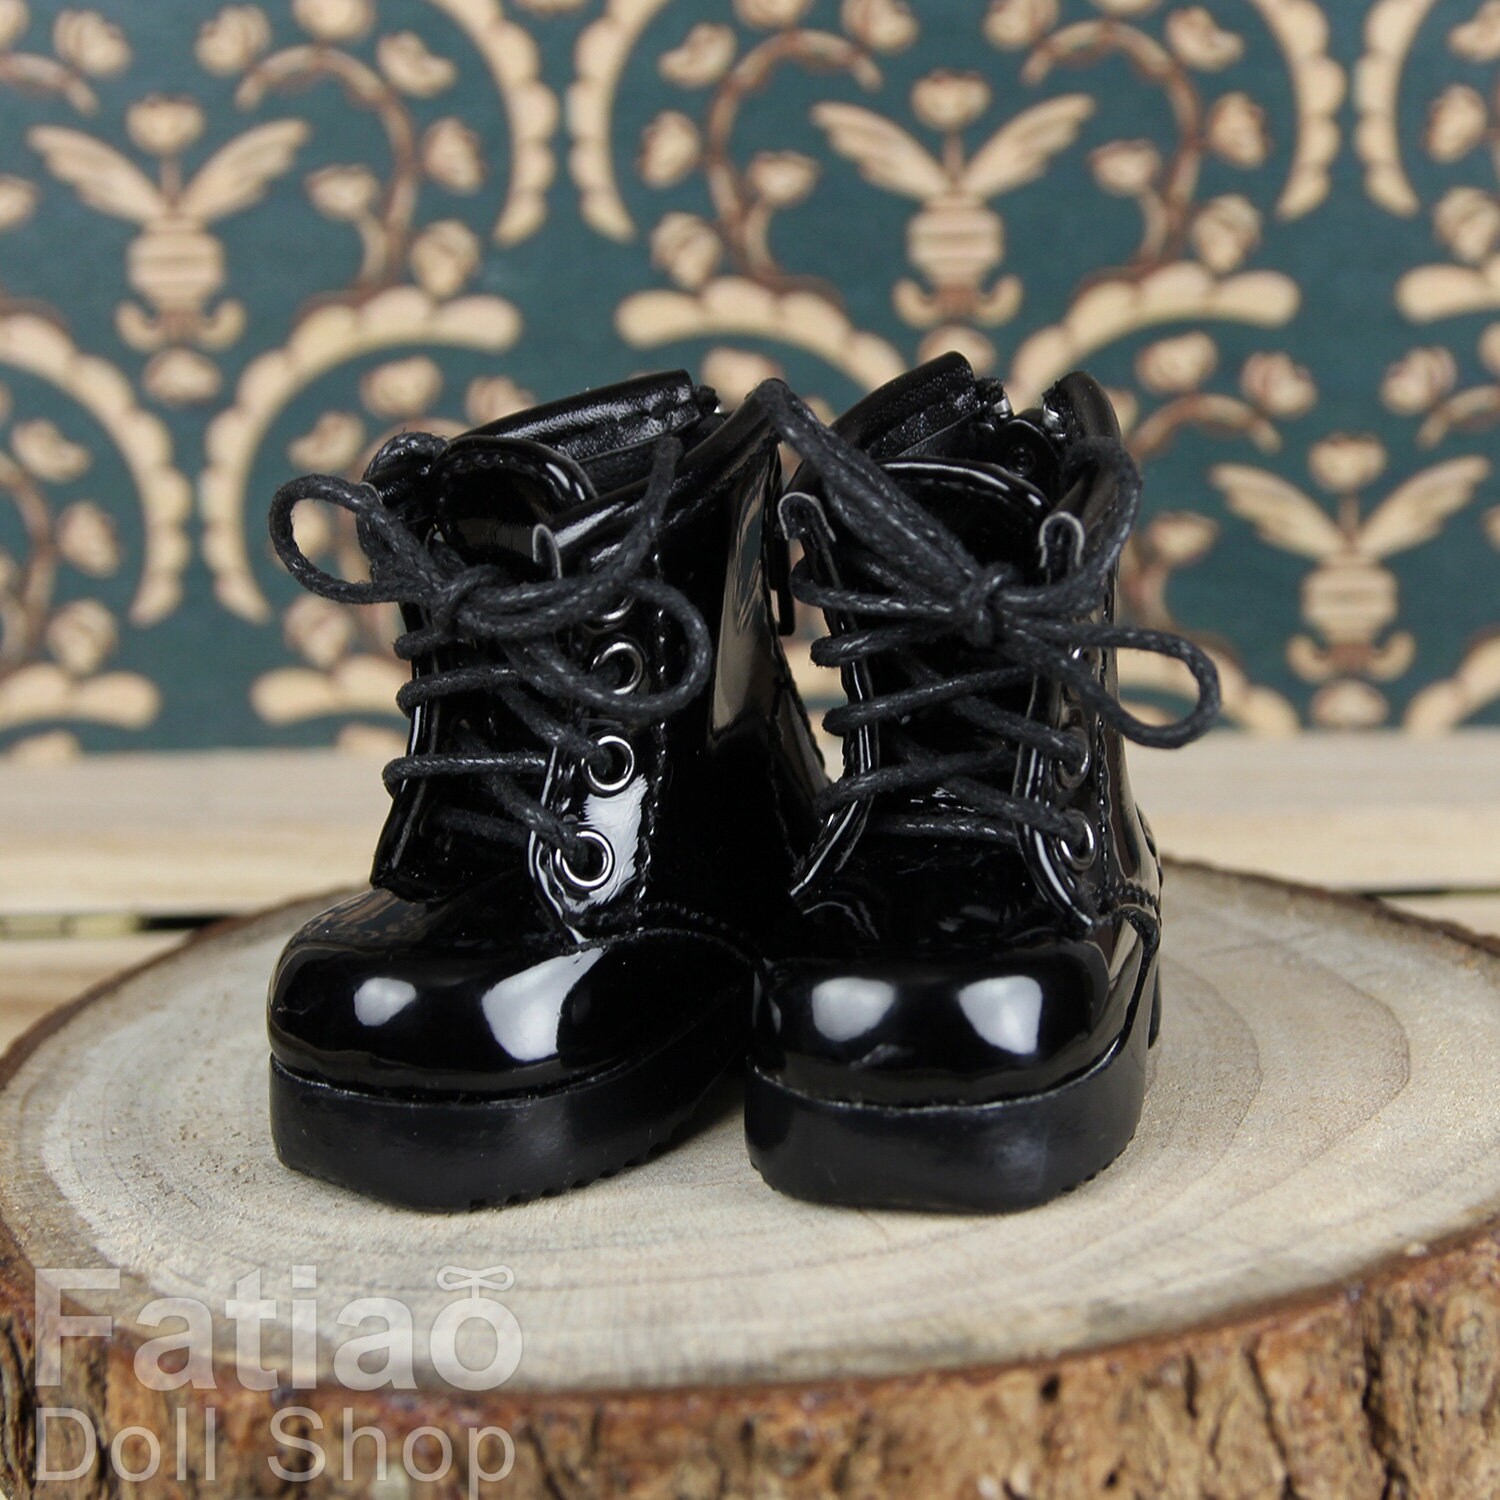 Fatiao New Dollfie Yo-sd 1/6 BJD Doll Shoes Boots Black - Etsy